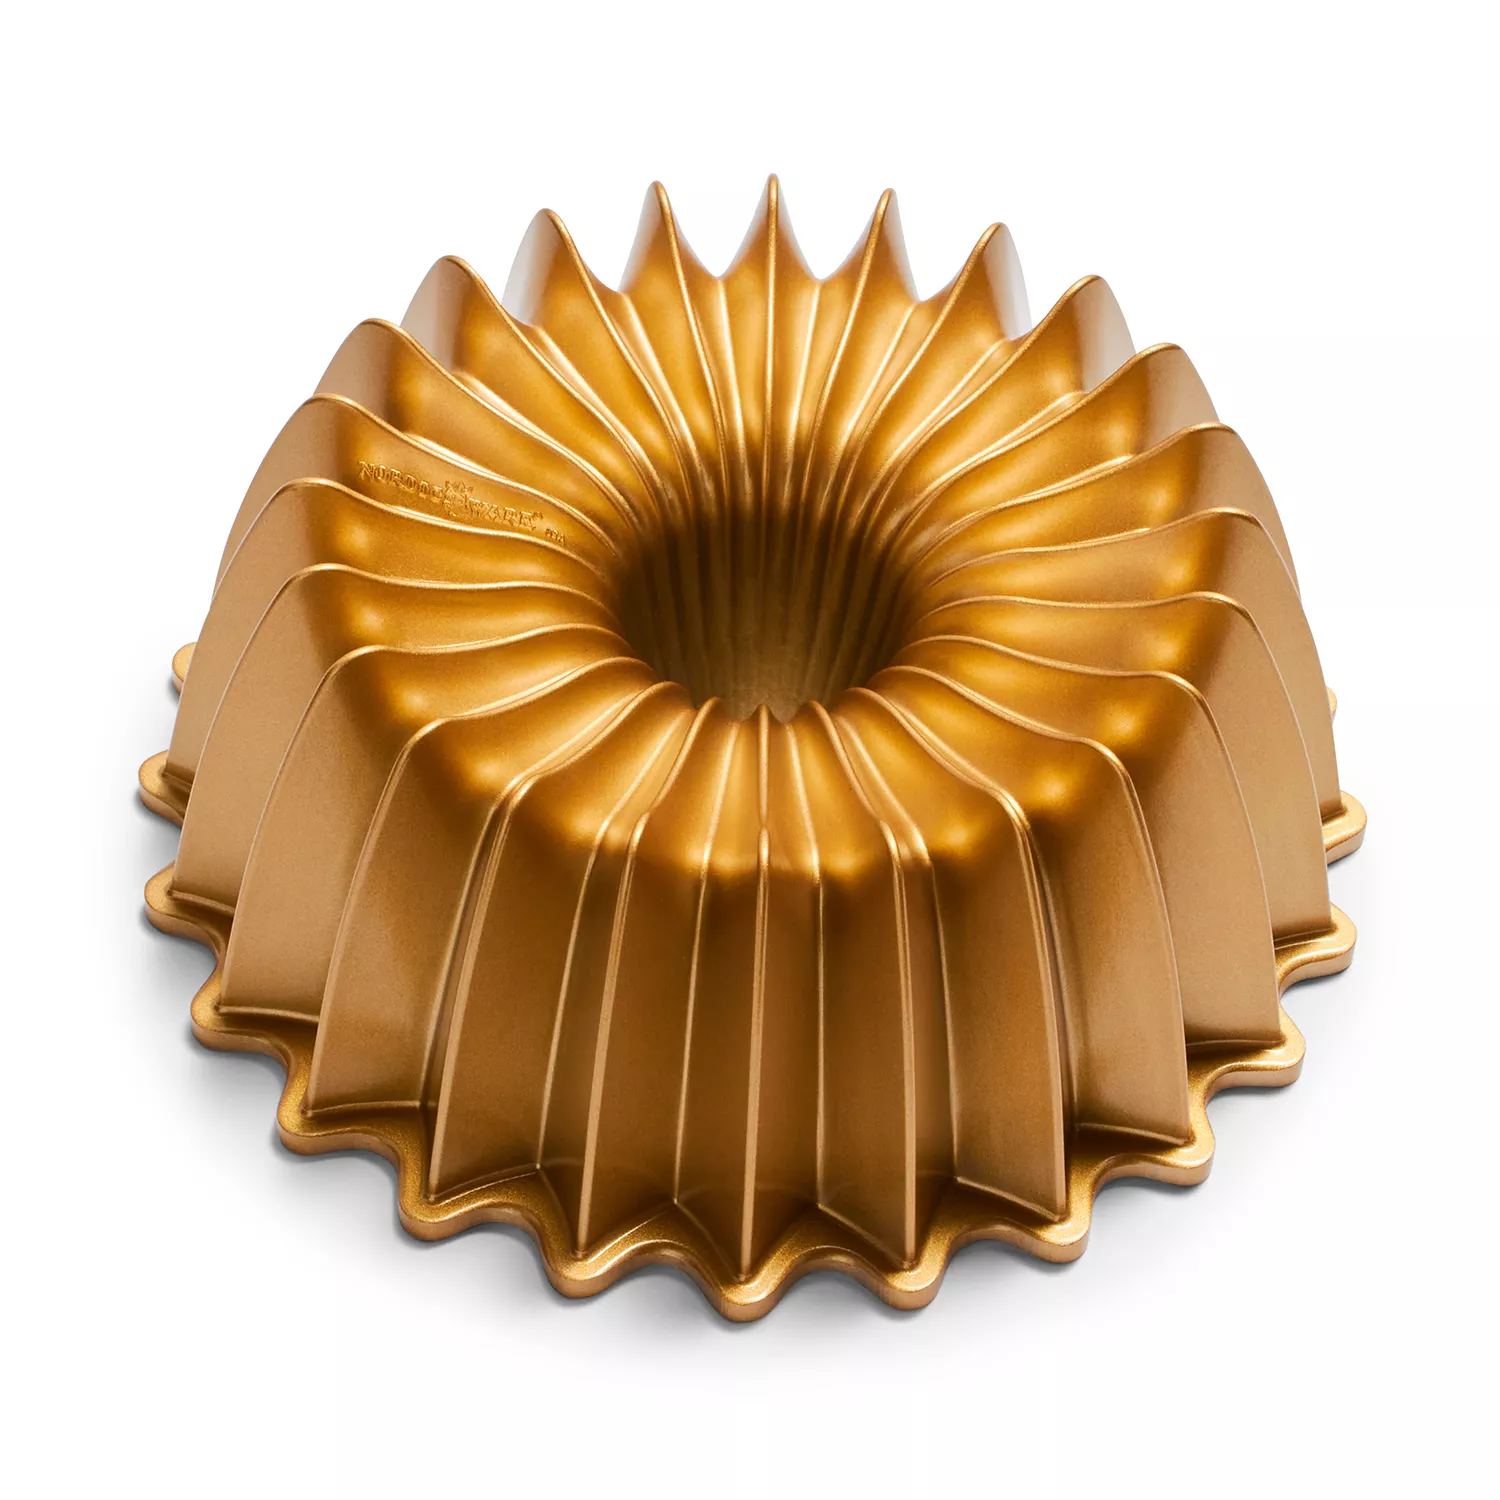 Nordic Ware Brilliance Bundt Pan Gold (Online Only)